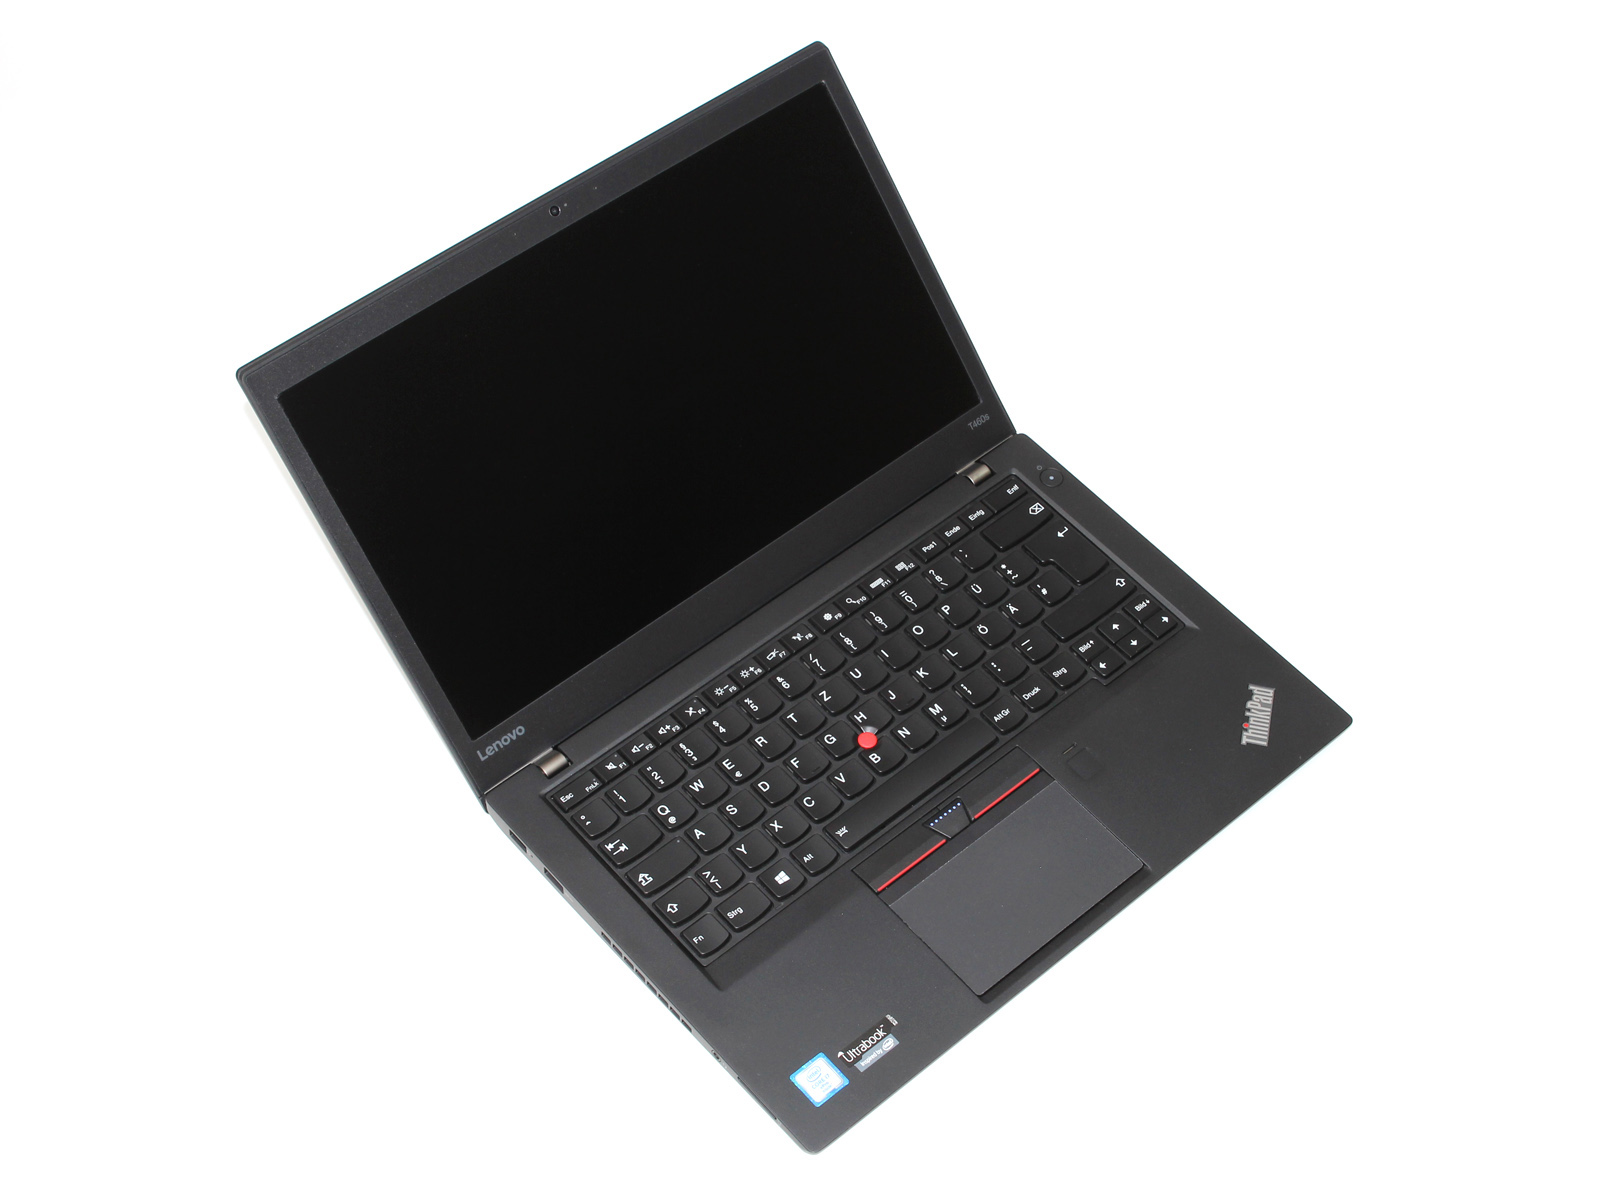 limbs Screenplay Variant Lenovo ThinkPad T460s (Core i7, WQHD) Ultrabook Review - NotebookCheck.net  Reviews